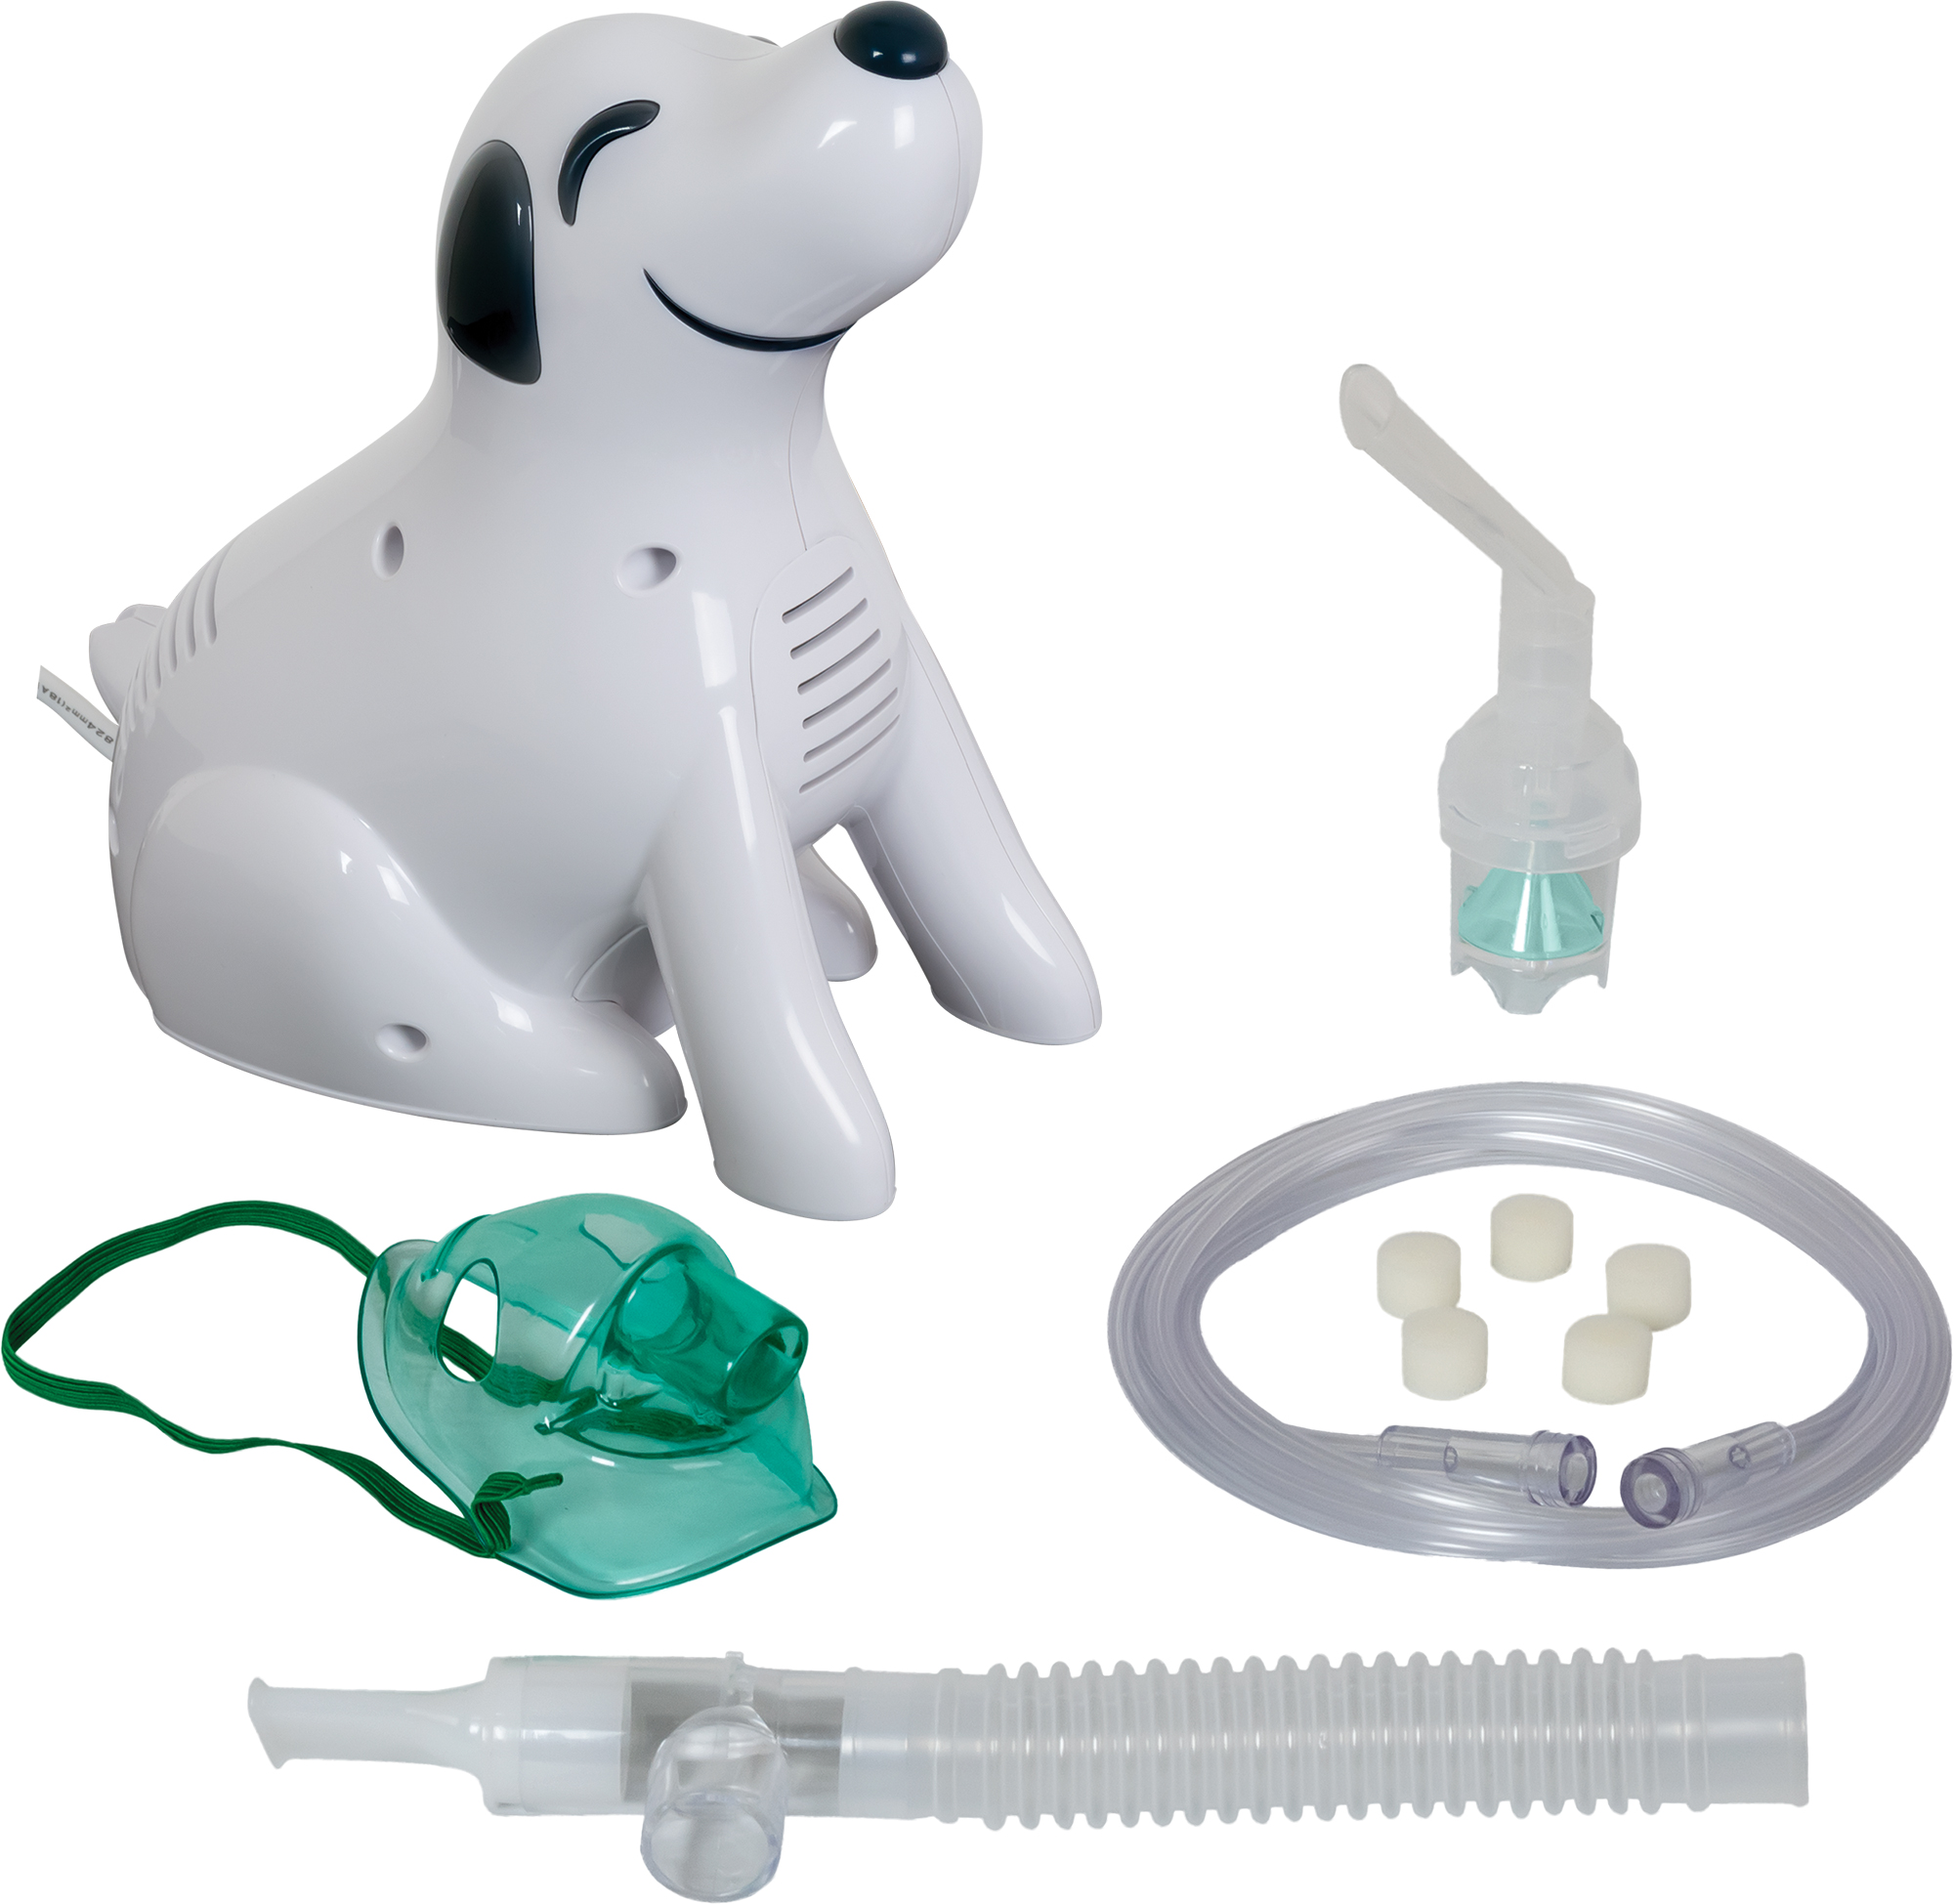 Respiratory Care - Nepenthe Home Medical Equipment